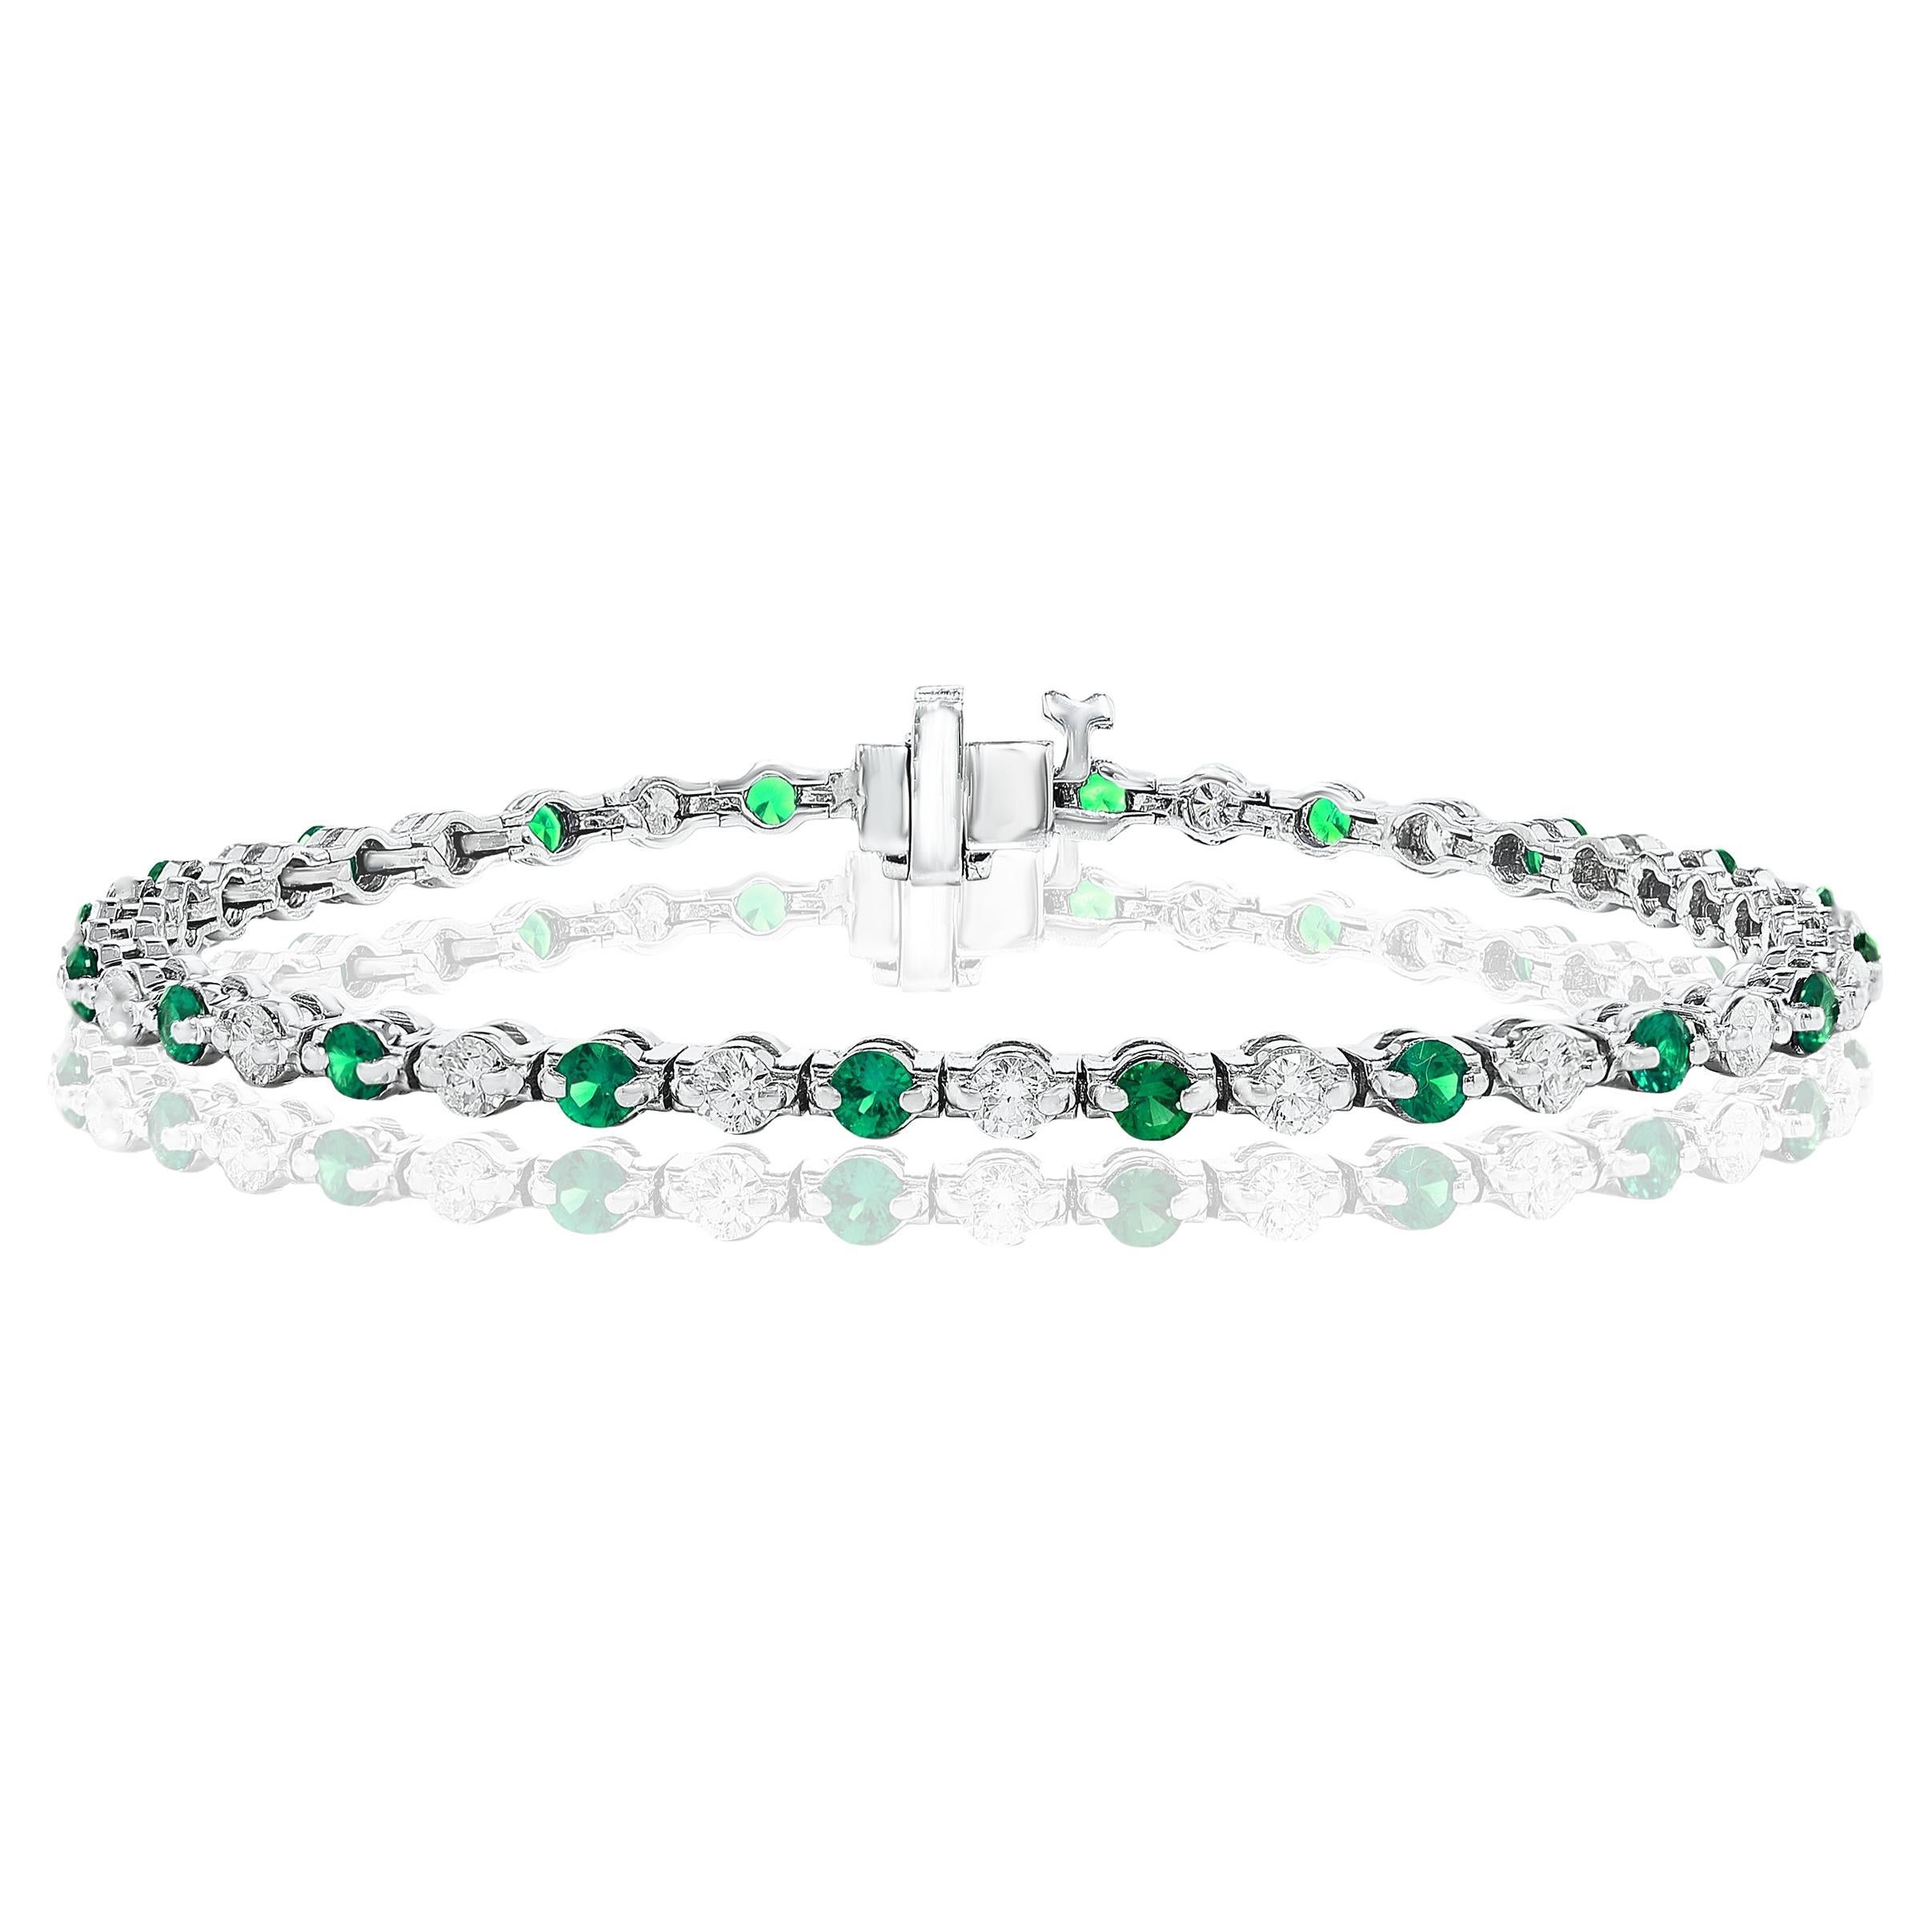 Grandeur 2.24 Carat Round Emerald and Diamond Bracelet in 14K White Gold